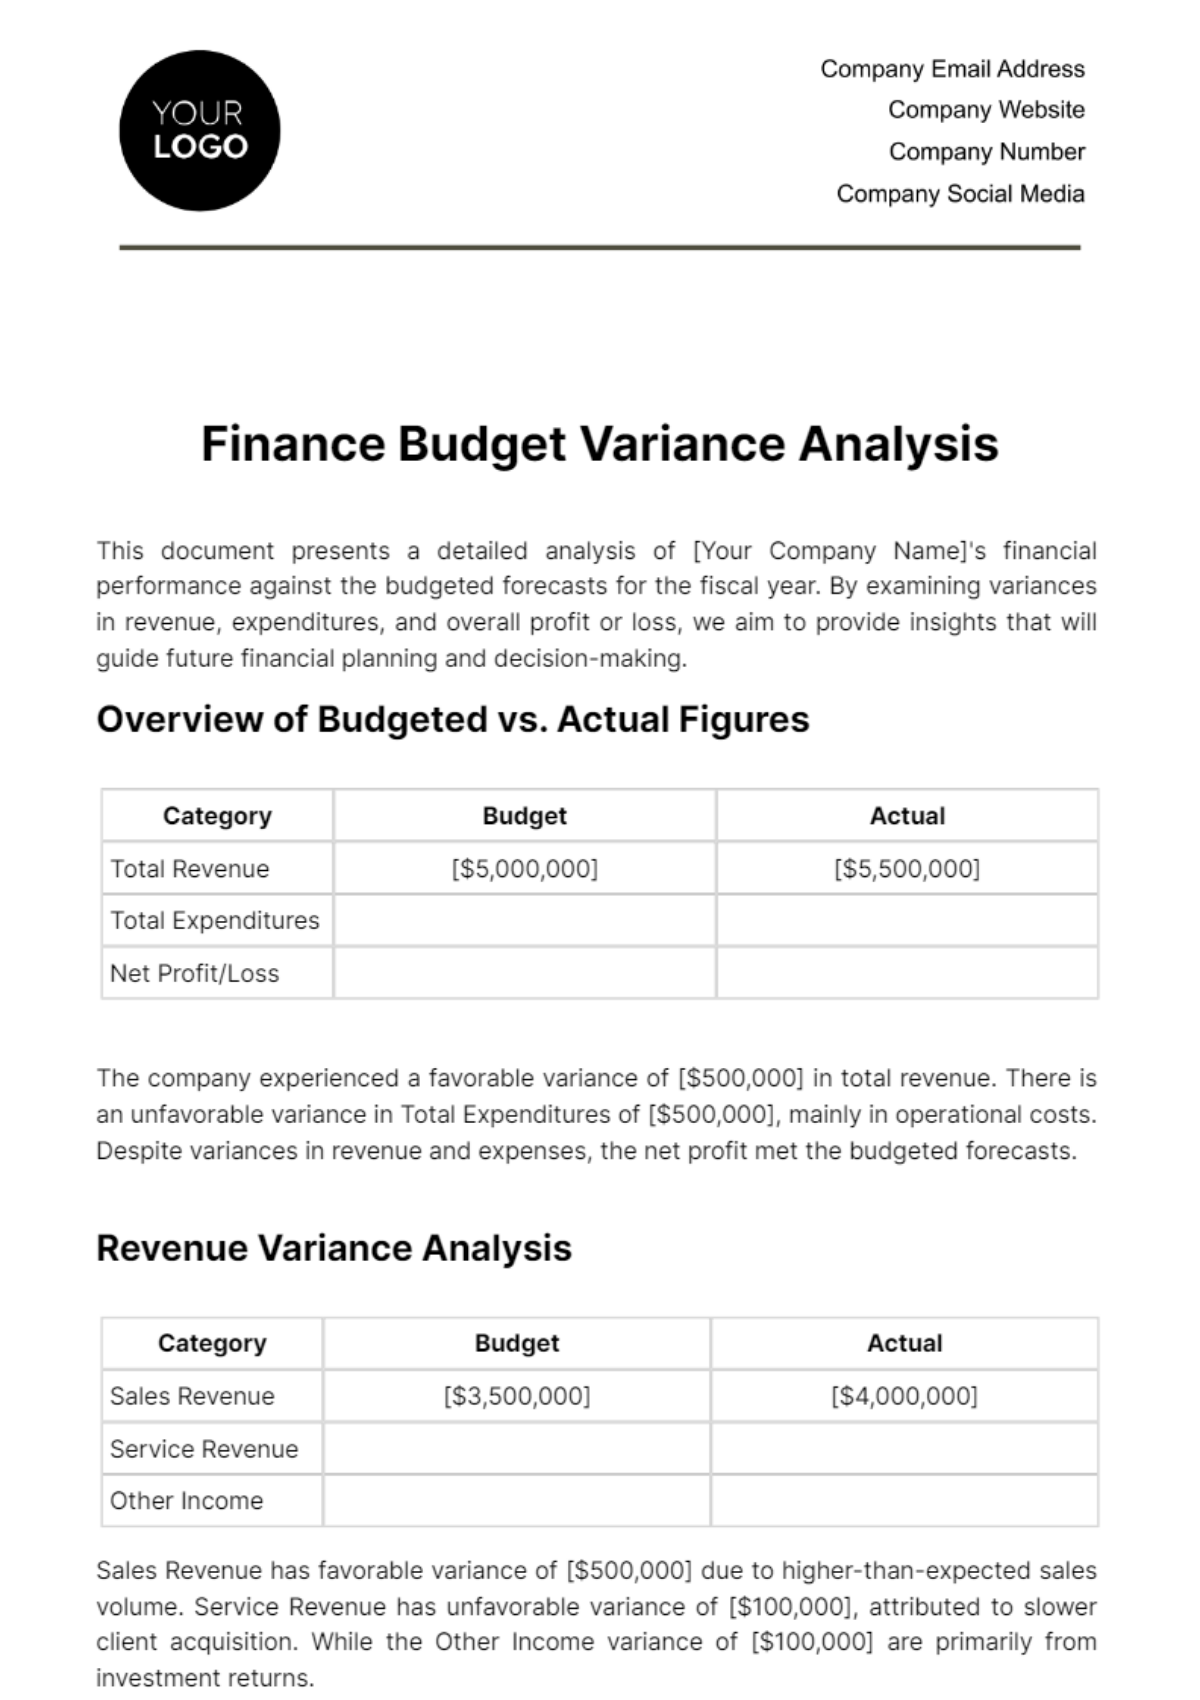 Finance Budget Variance Analysis Template